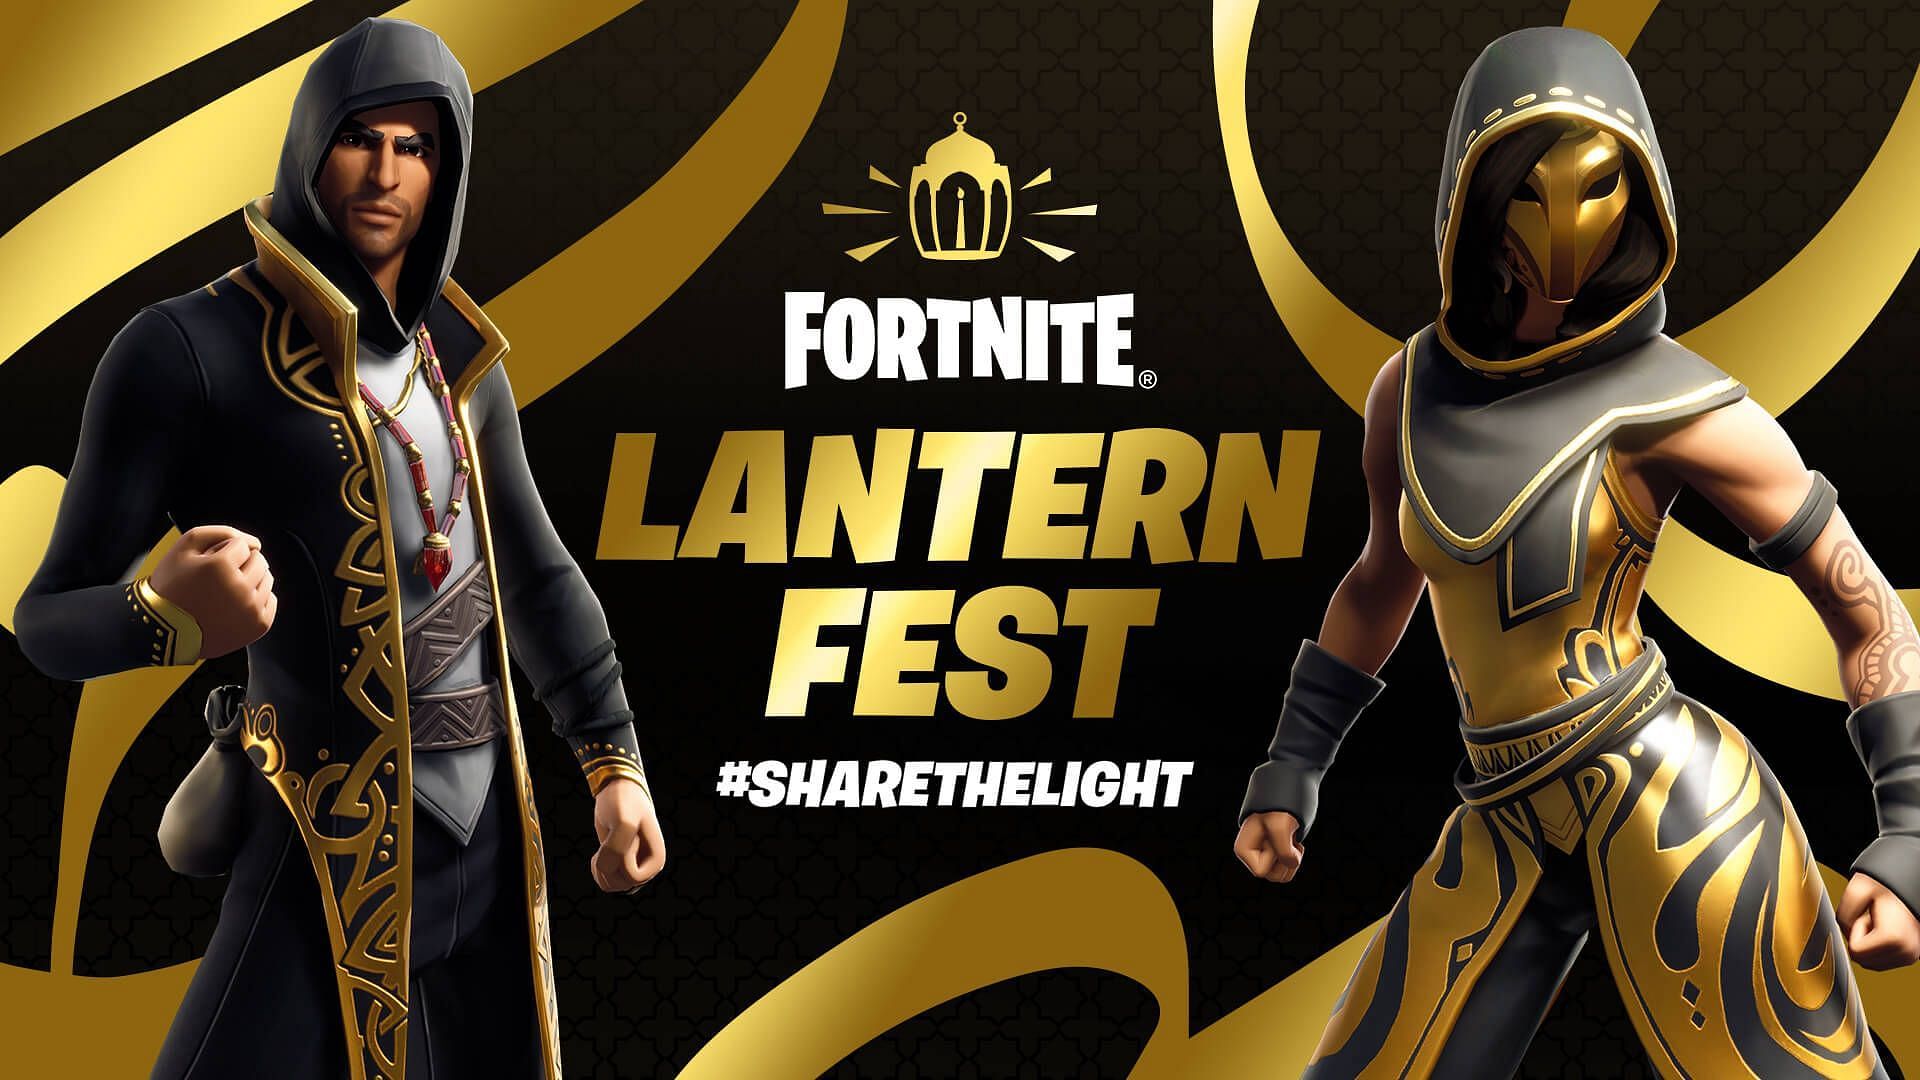 The Lantern Fest in Fortnite. (Image via Epic Games)